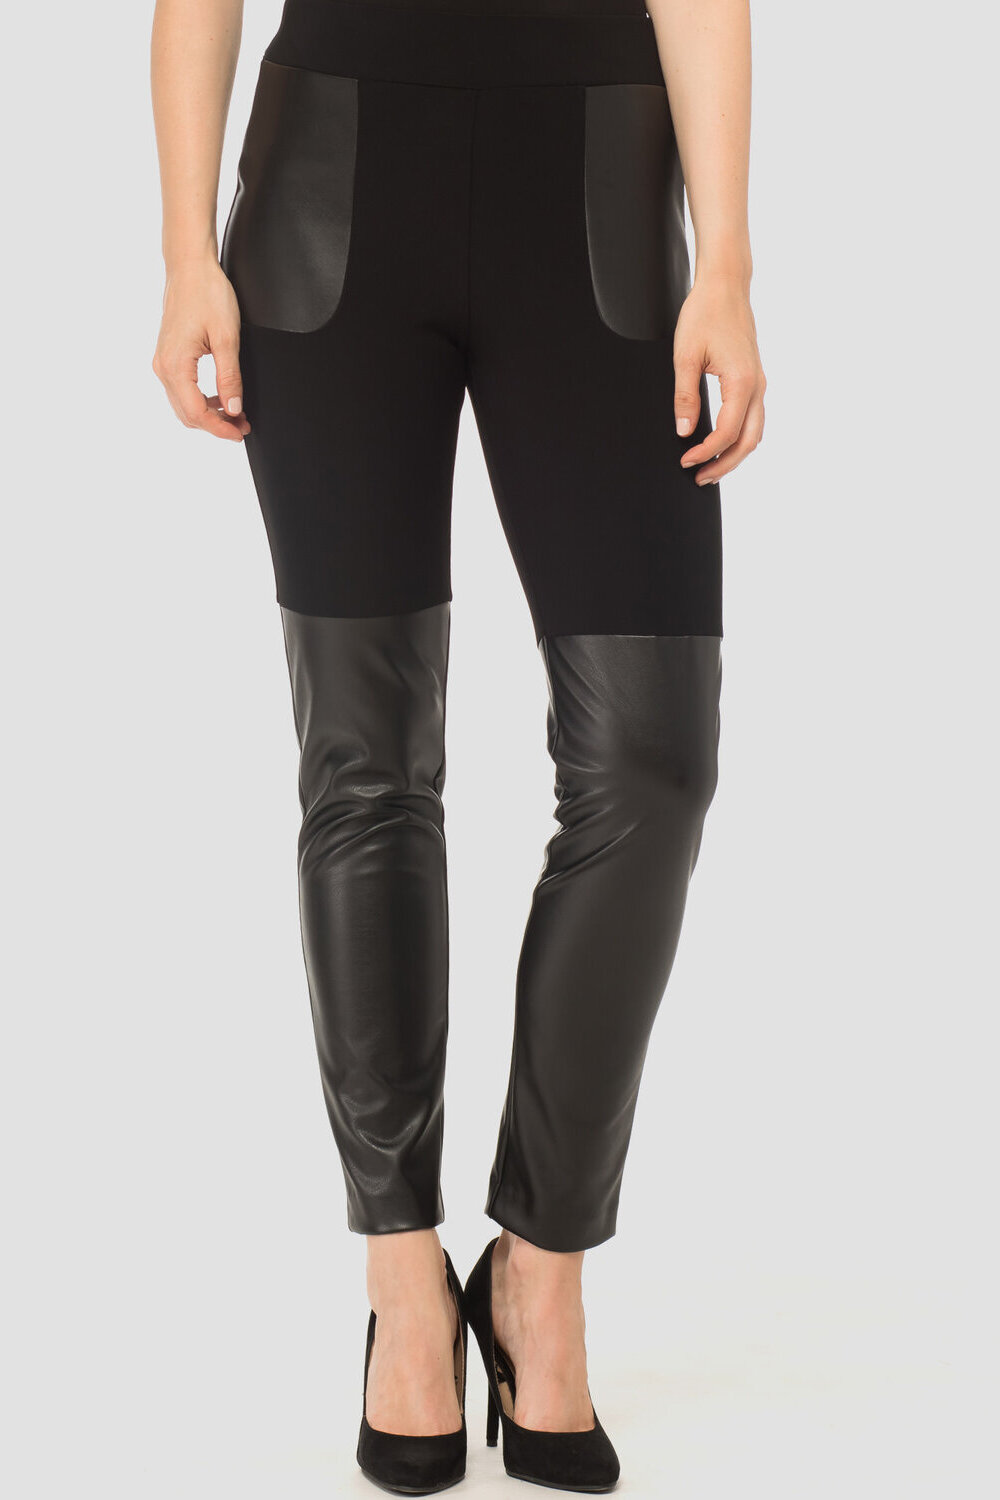 Joseph Ribkoff pantalon style 184400. Noir/noir